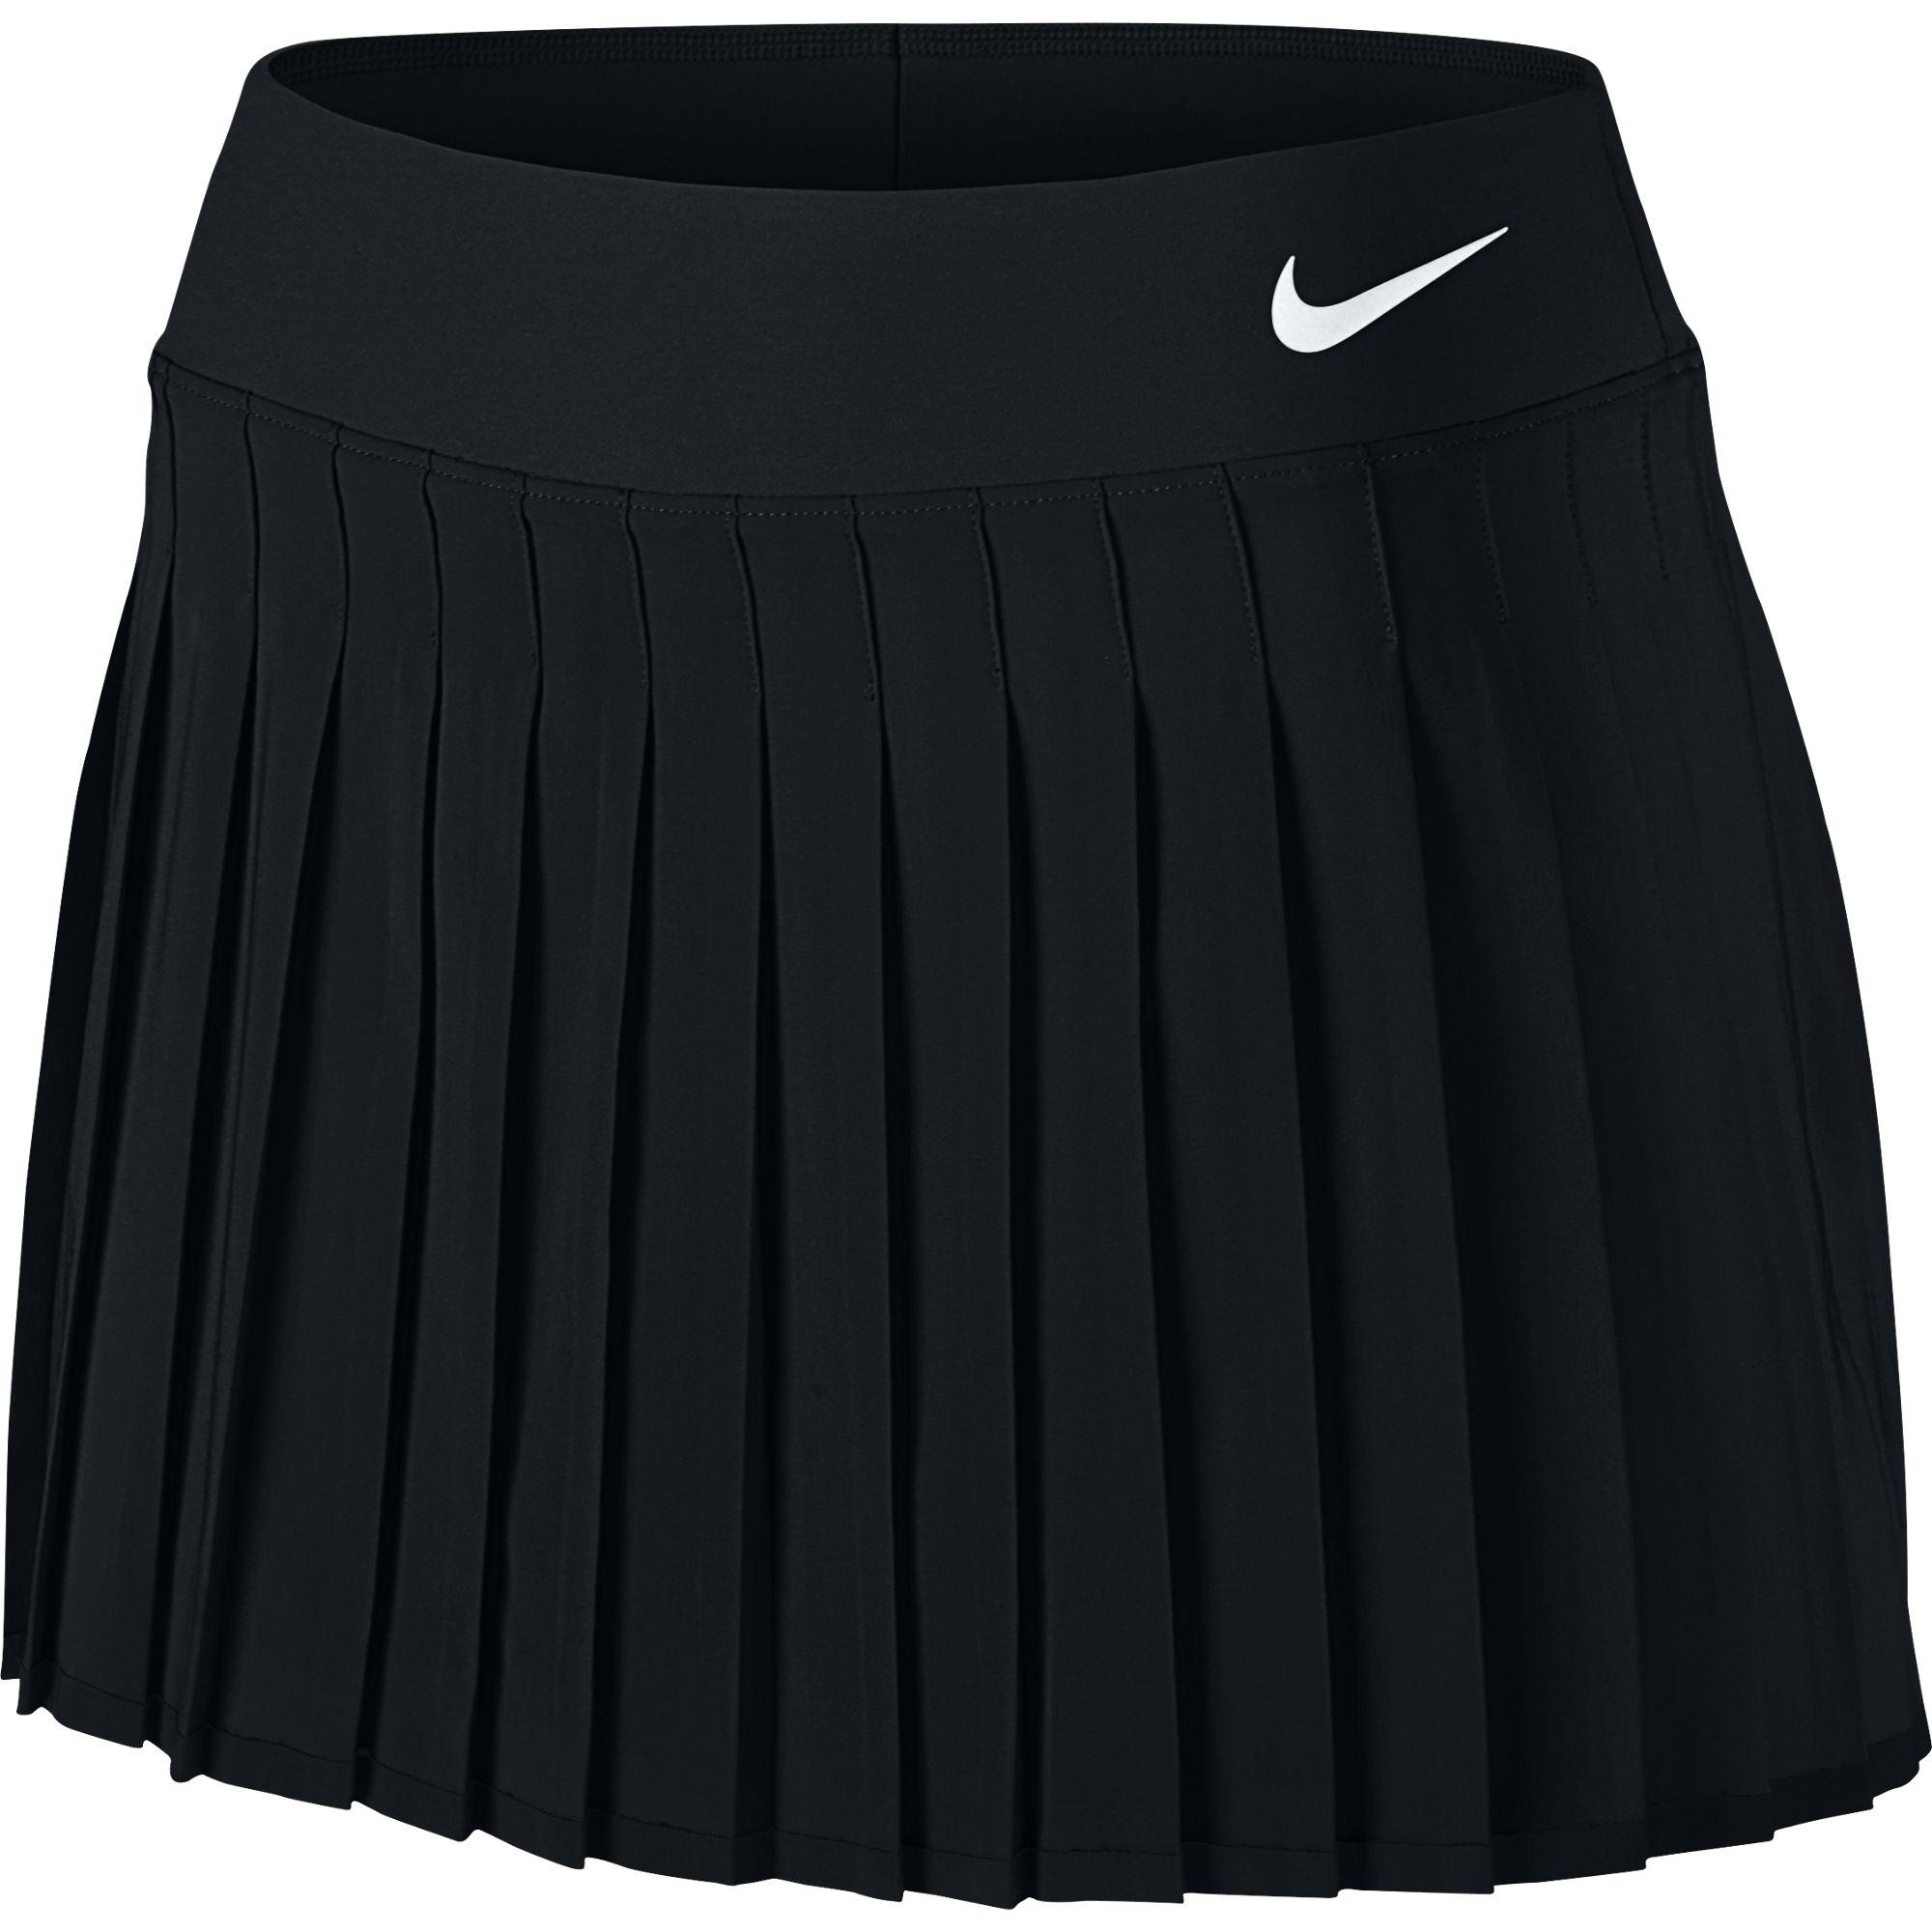 Юбка найк. Теннисная юбка Nike. Юбка найк для тенниса. Теннисная юбка найк плиссированная. Юбка шорты плиссе Nike.